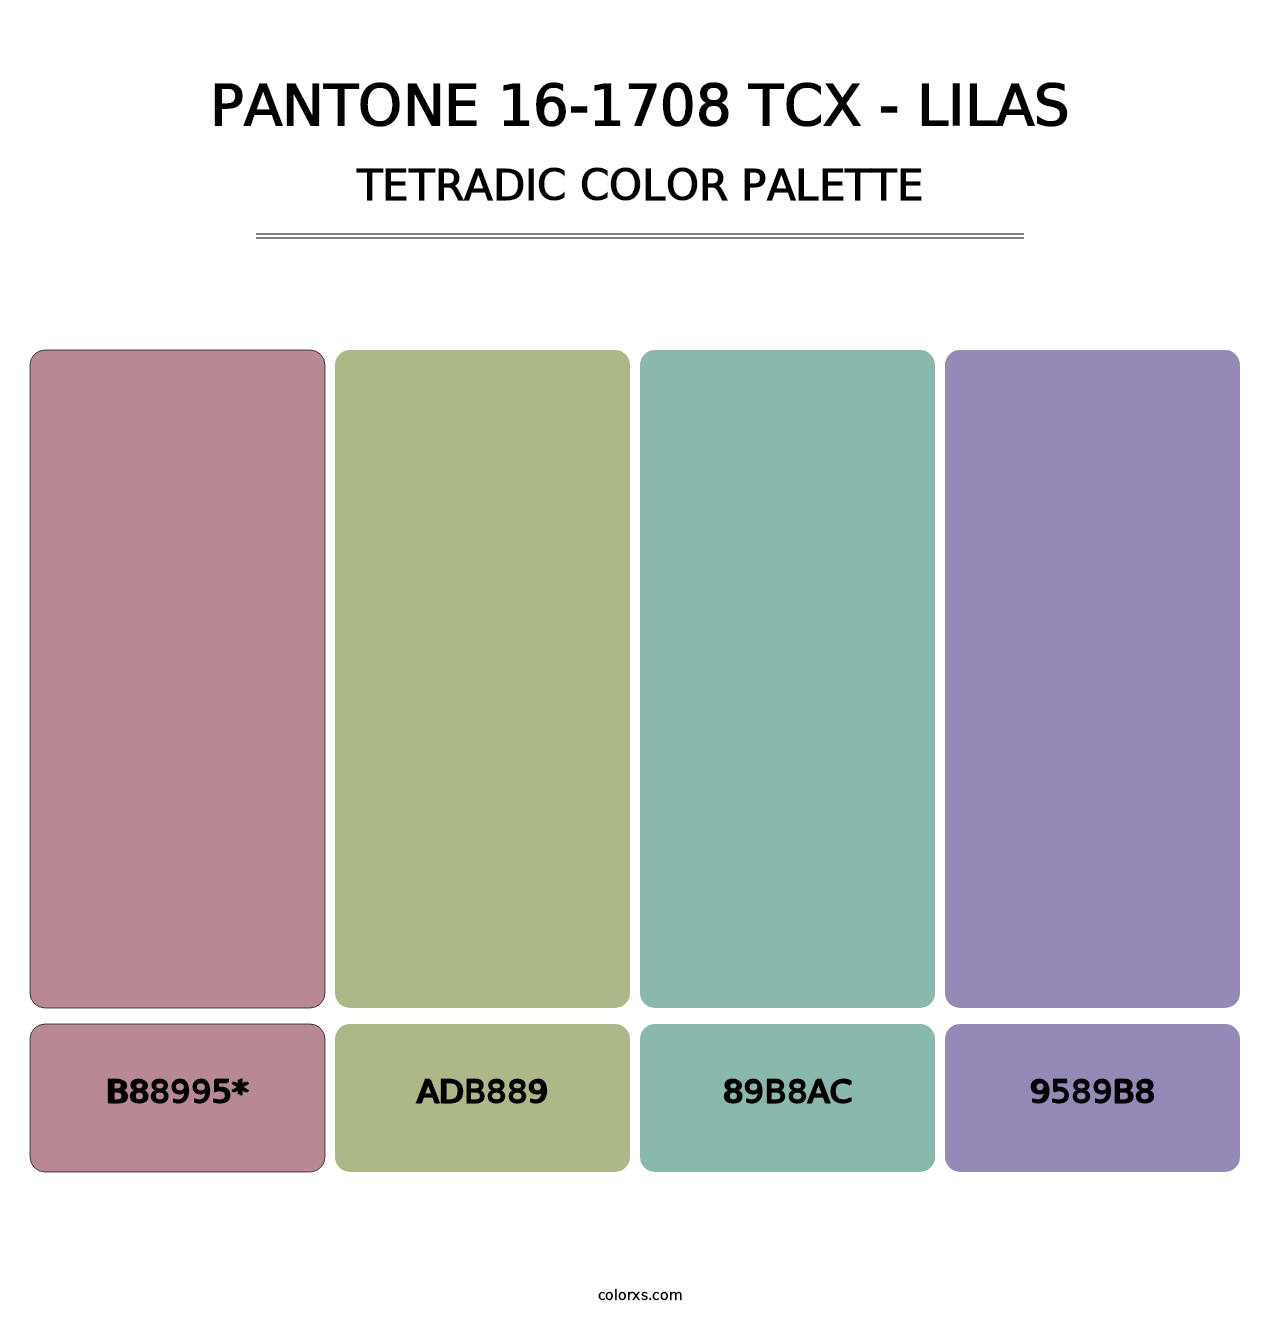 PANTONE 16-1708 TCX - Lilas - Tetradic Color Palette